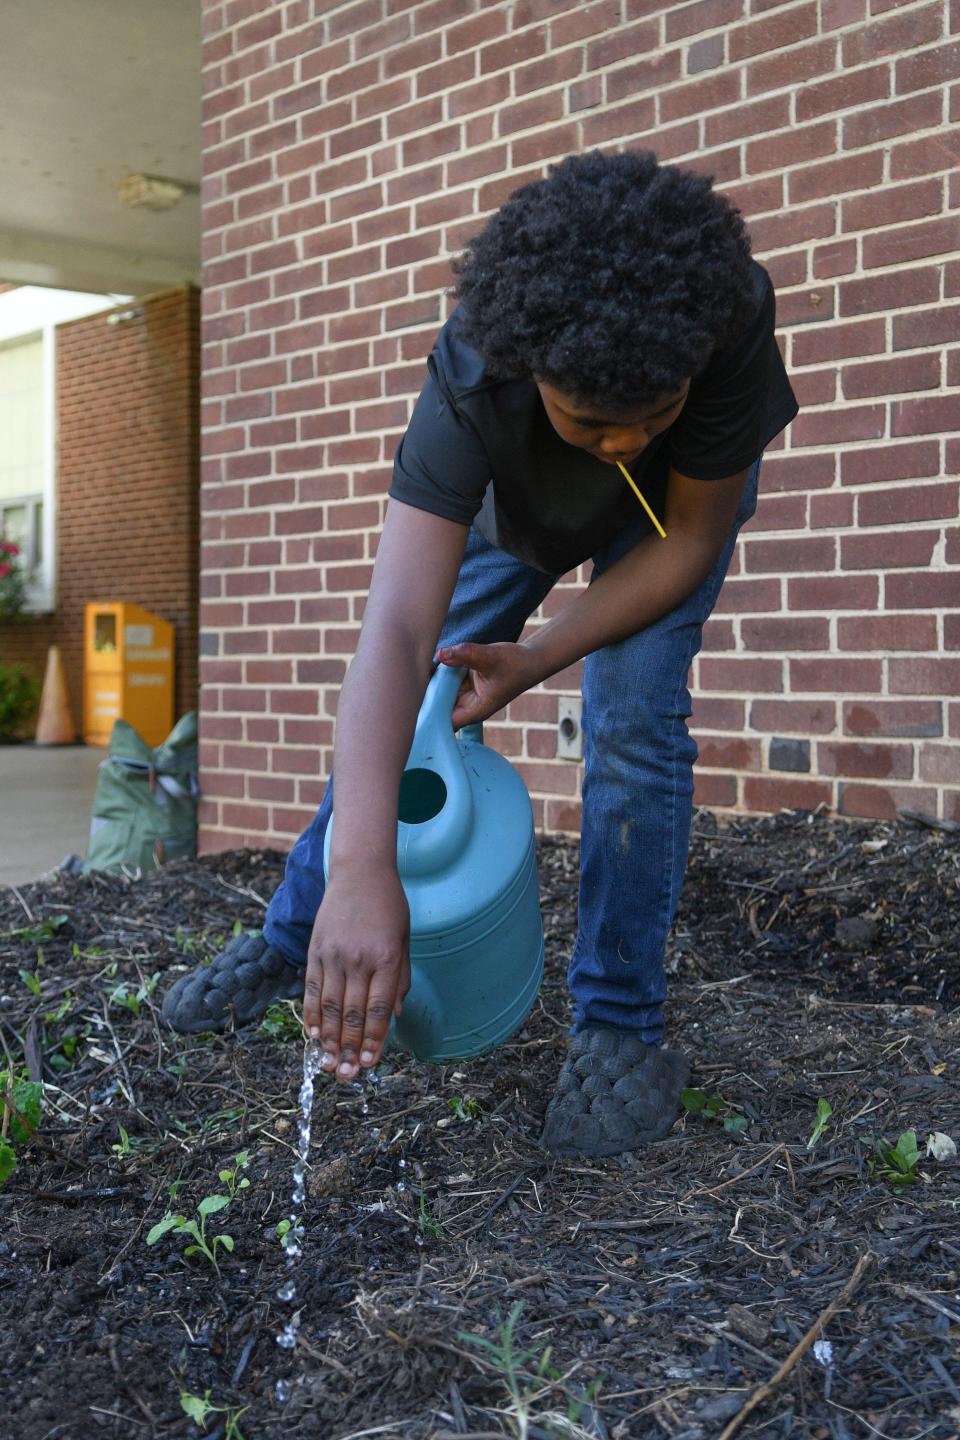 Sixth grader Deondre Jacobs waters seedlings in the Vine Middle School garden.